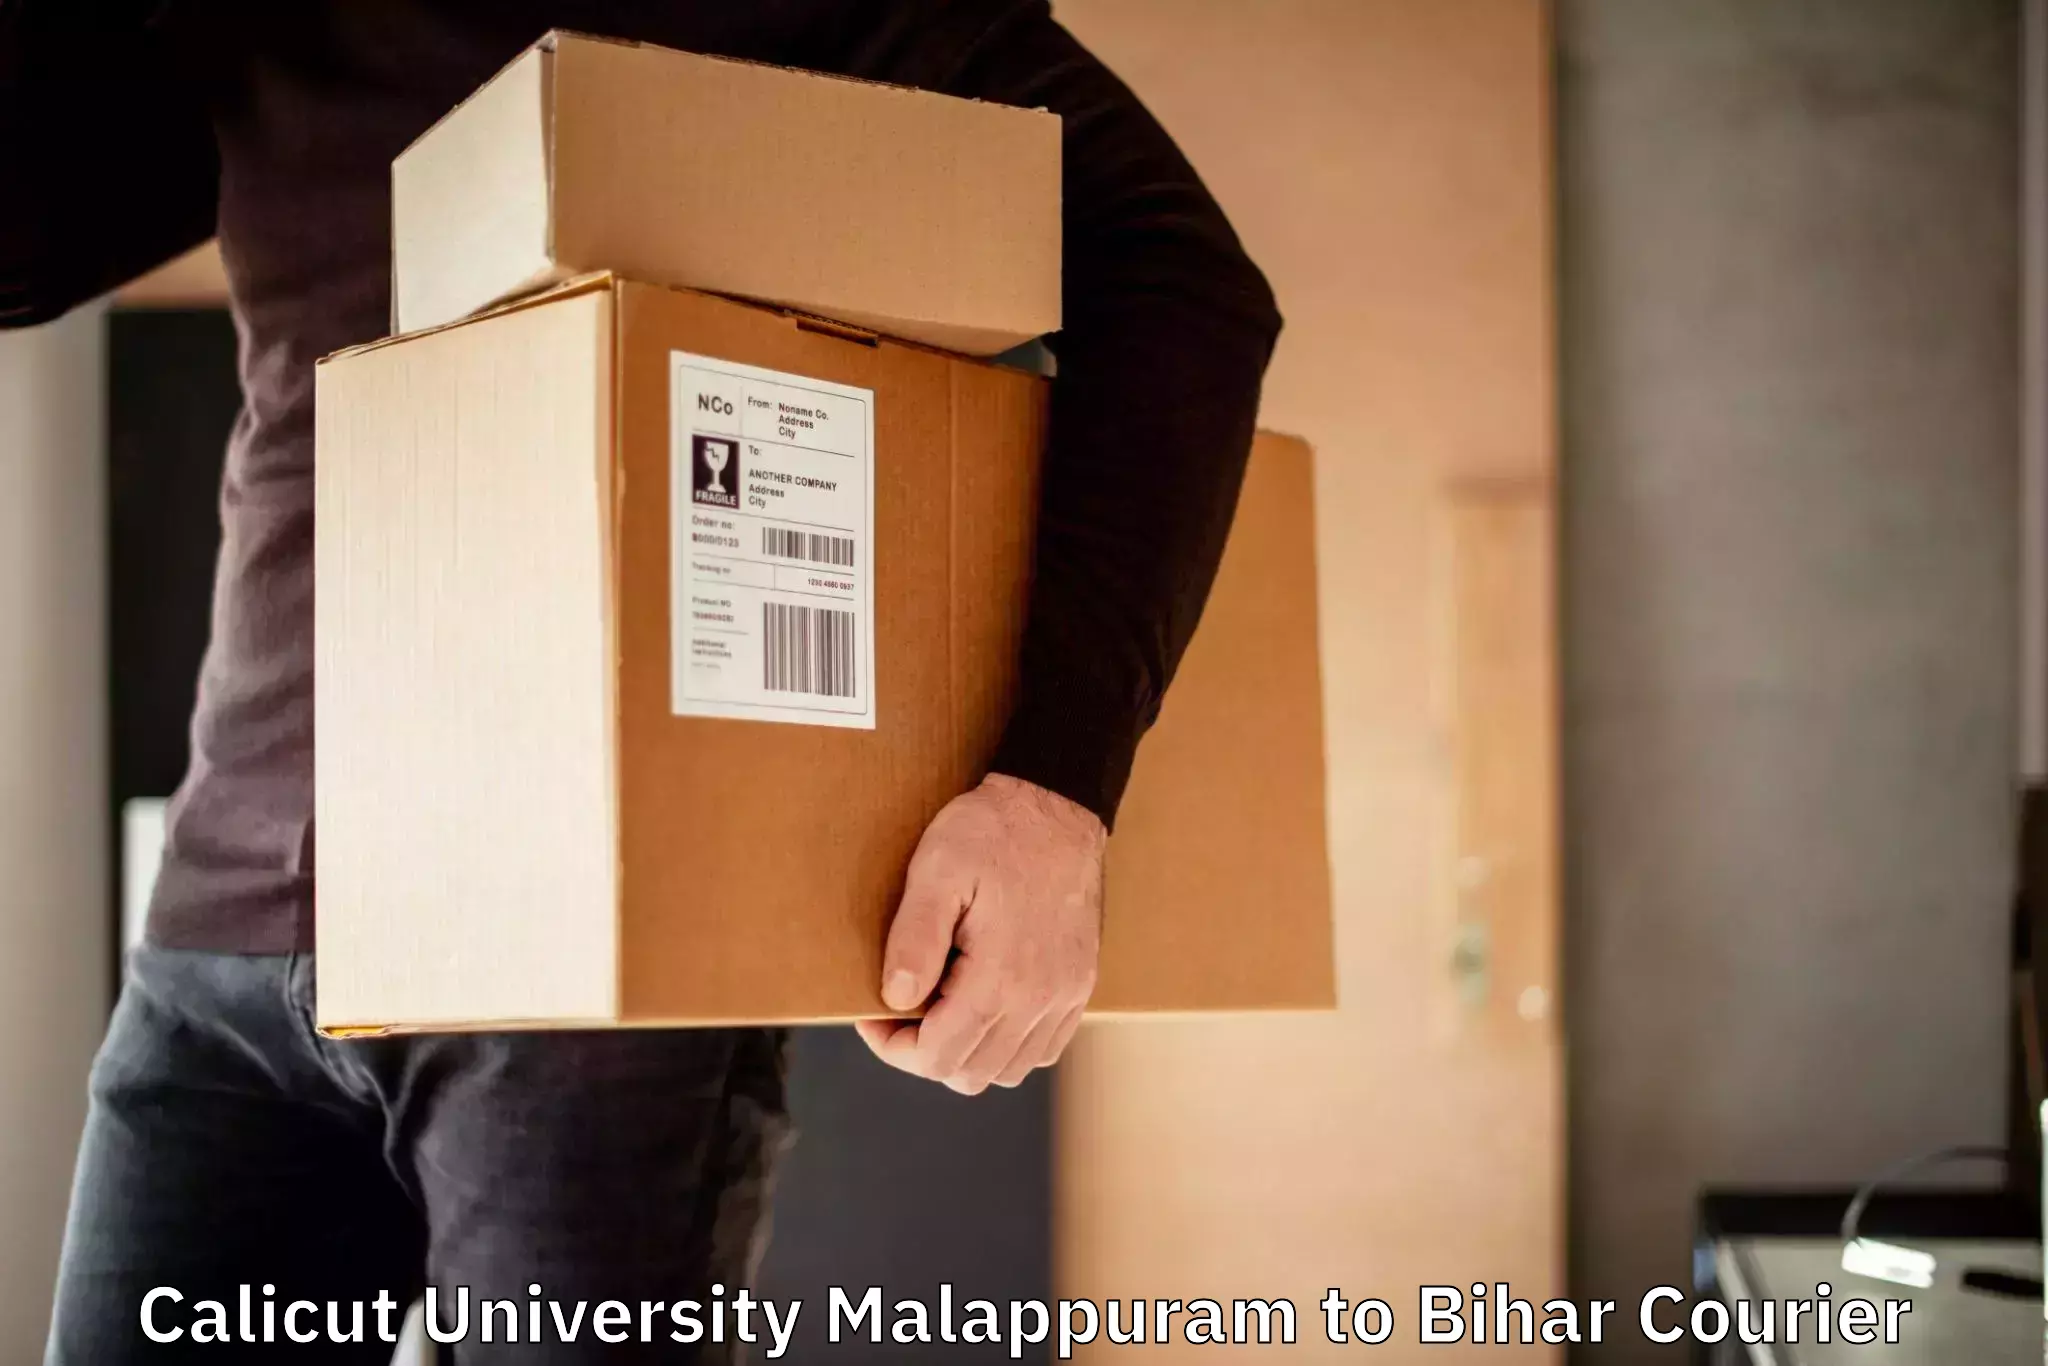 Nationwide parcel services Calicut University Malappuram to Bihar